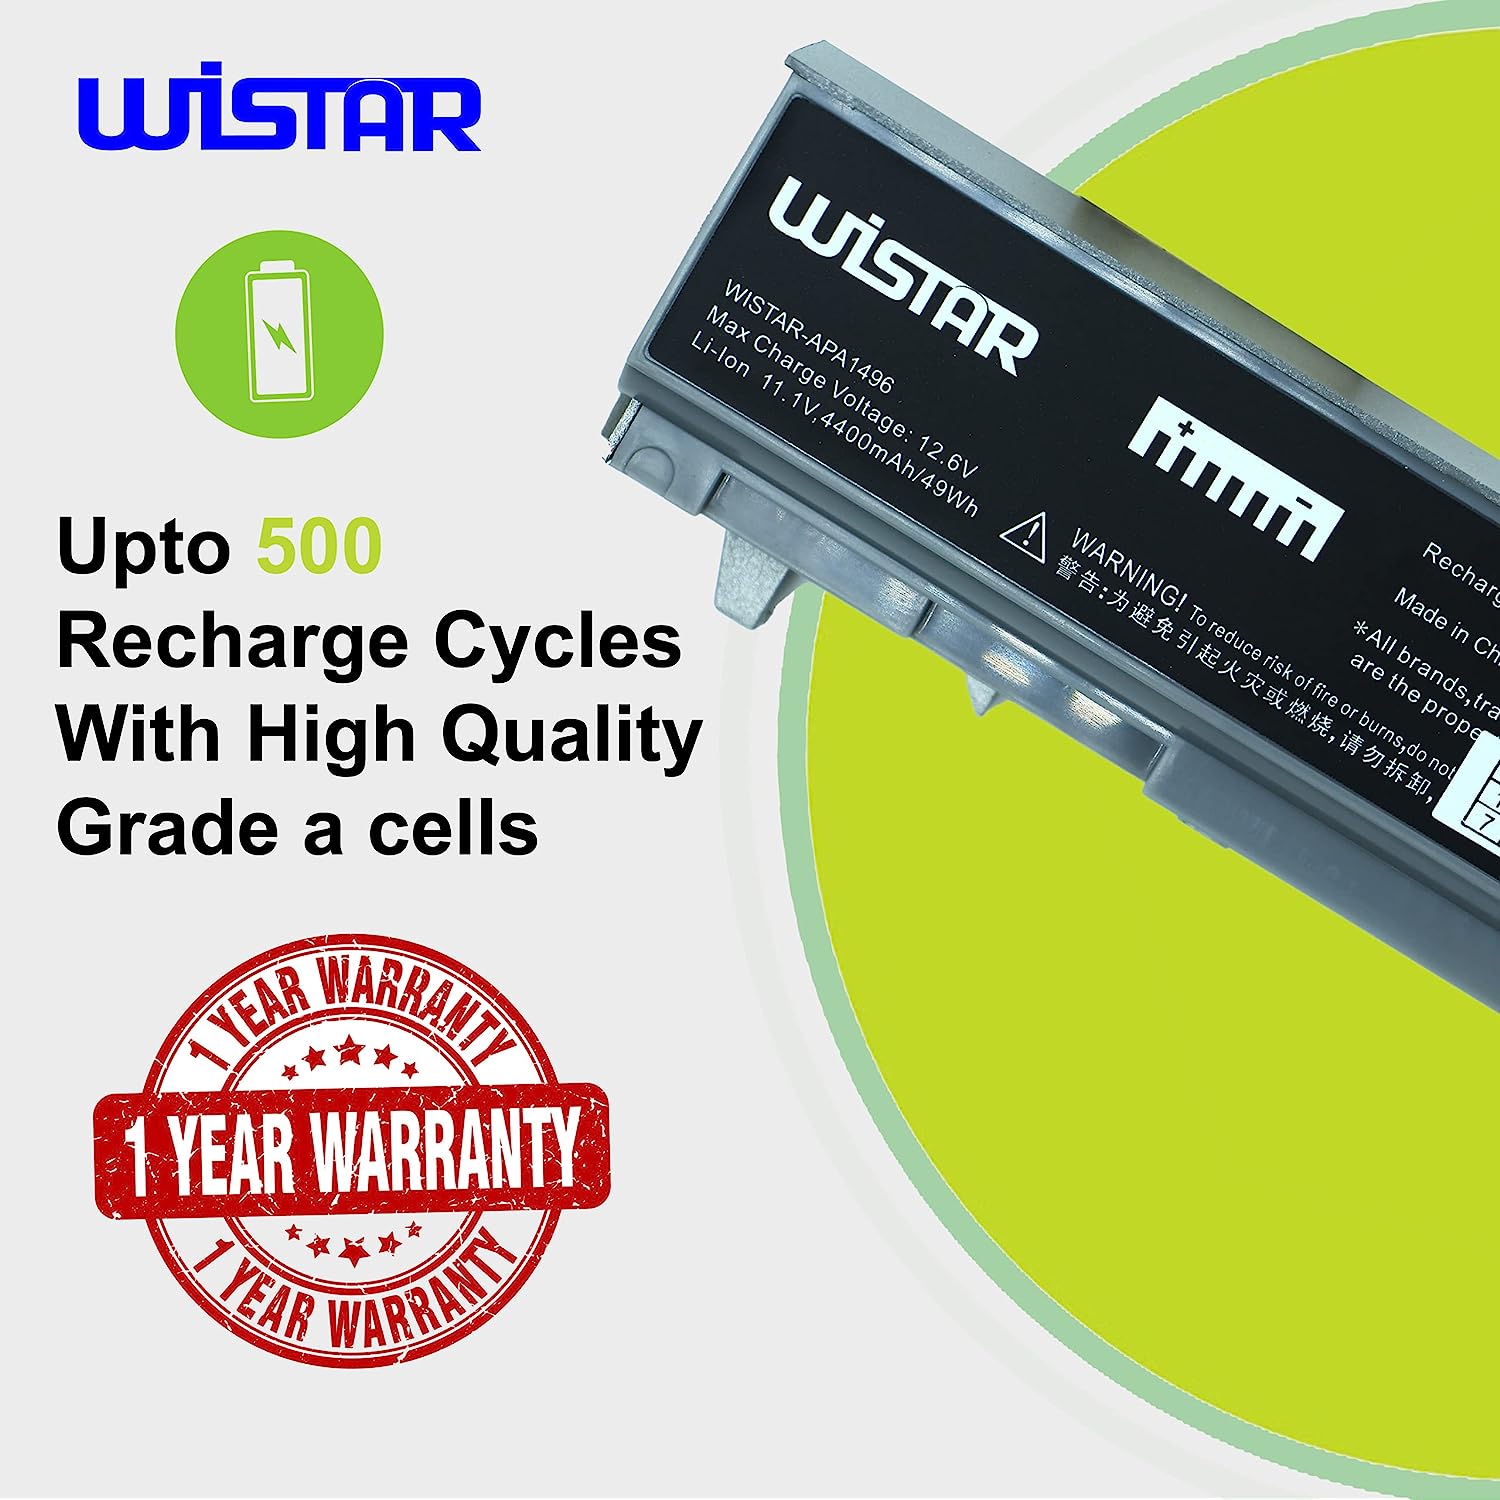 WISTAR 0RG049 PT434 KY265 W1193 Laptop Battery Replacement for Dell Latitude E6400 E6410 E6500 E6510 Precision M2400 M4400 M4500 Notebook